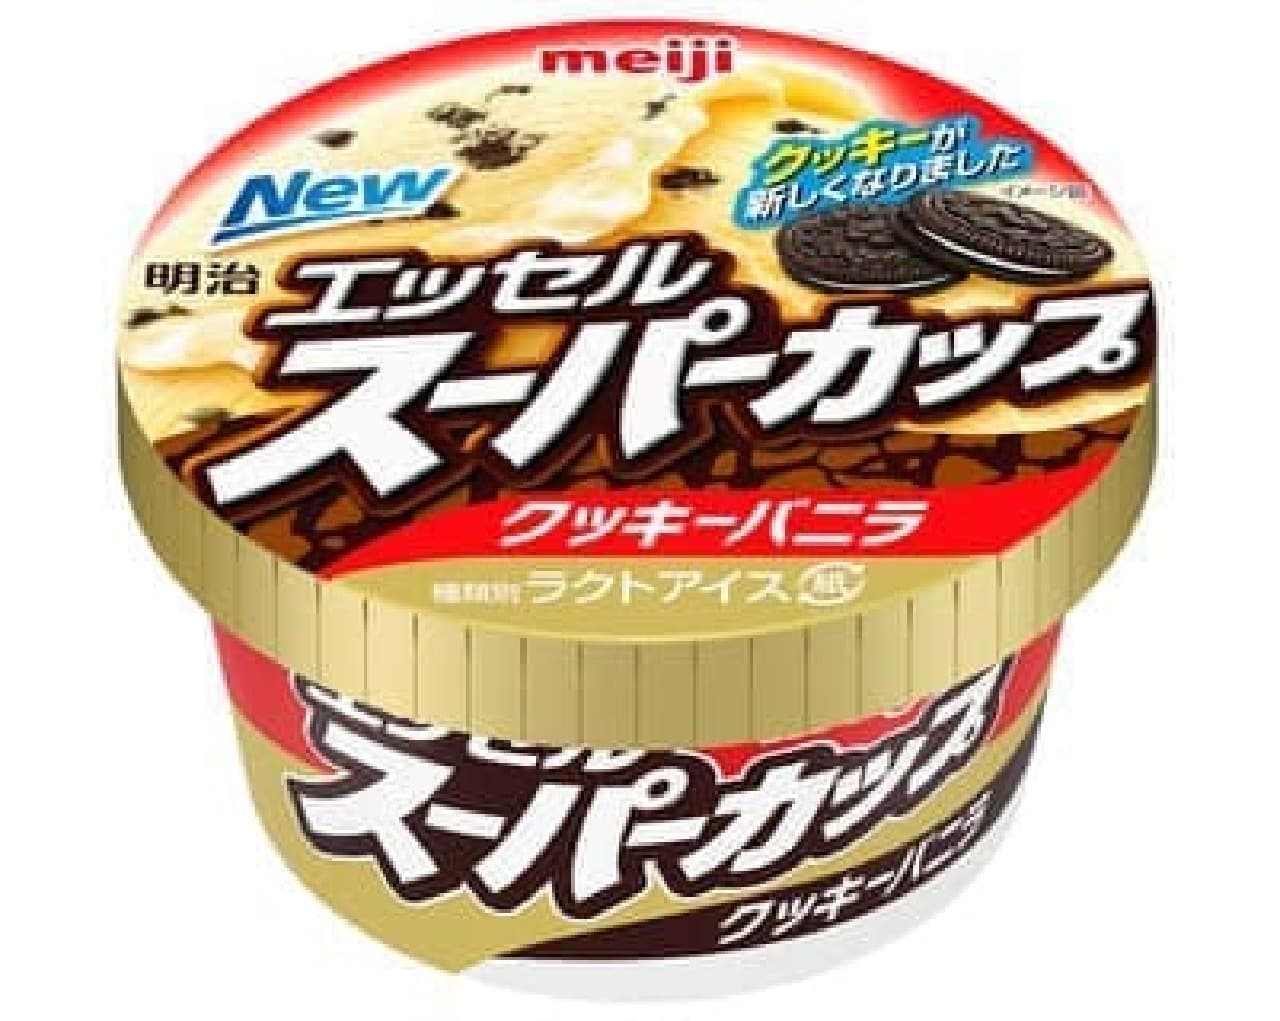 Meiji Essel Super Cup Cookie Vanilla